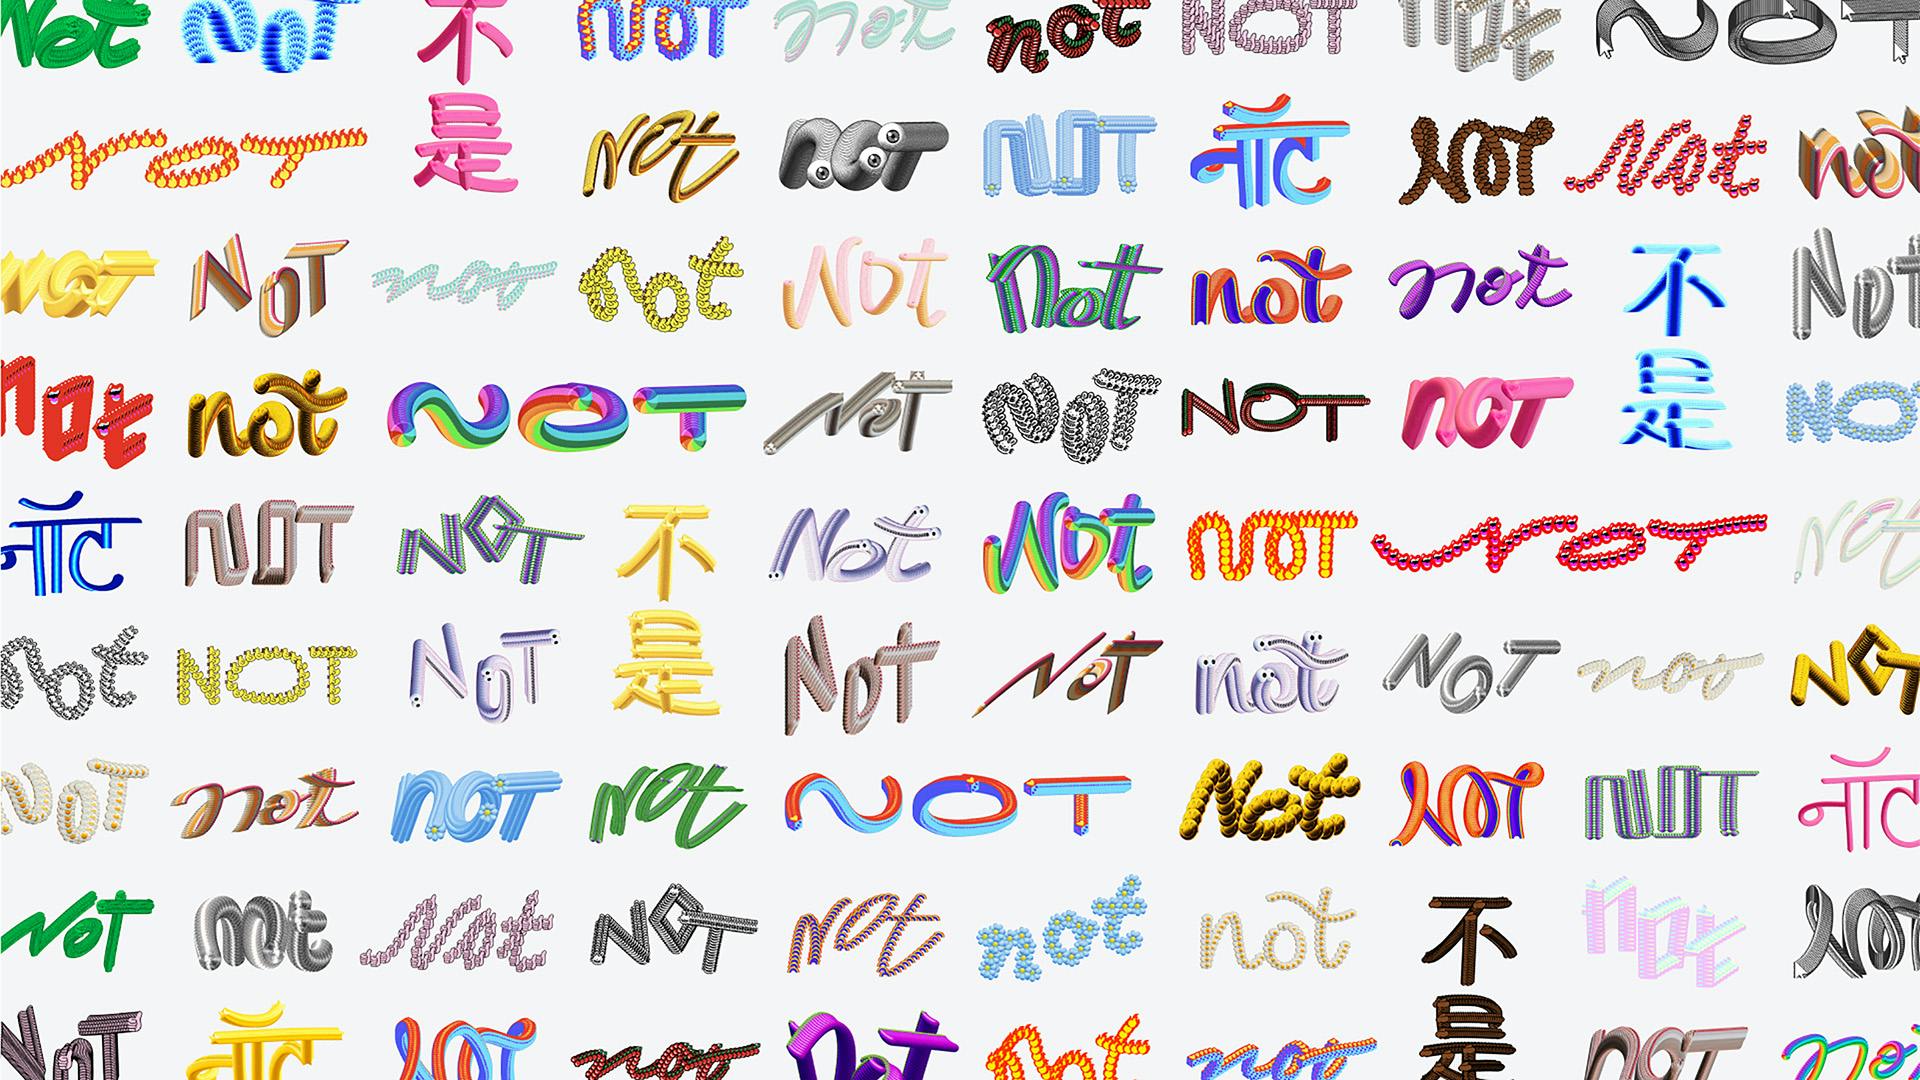 The word 'Not' written digitally in a range of styles